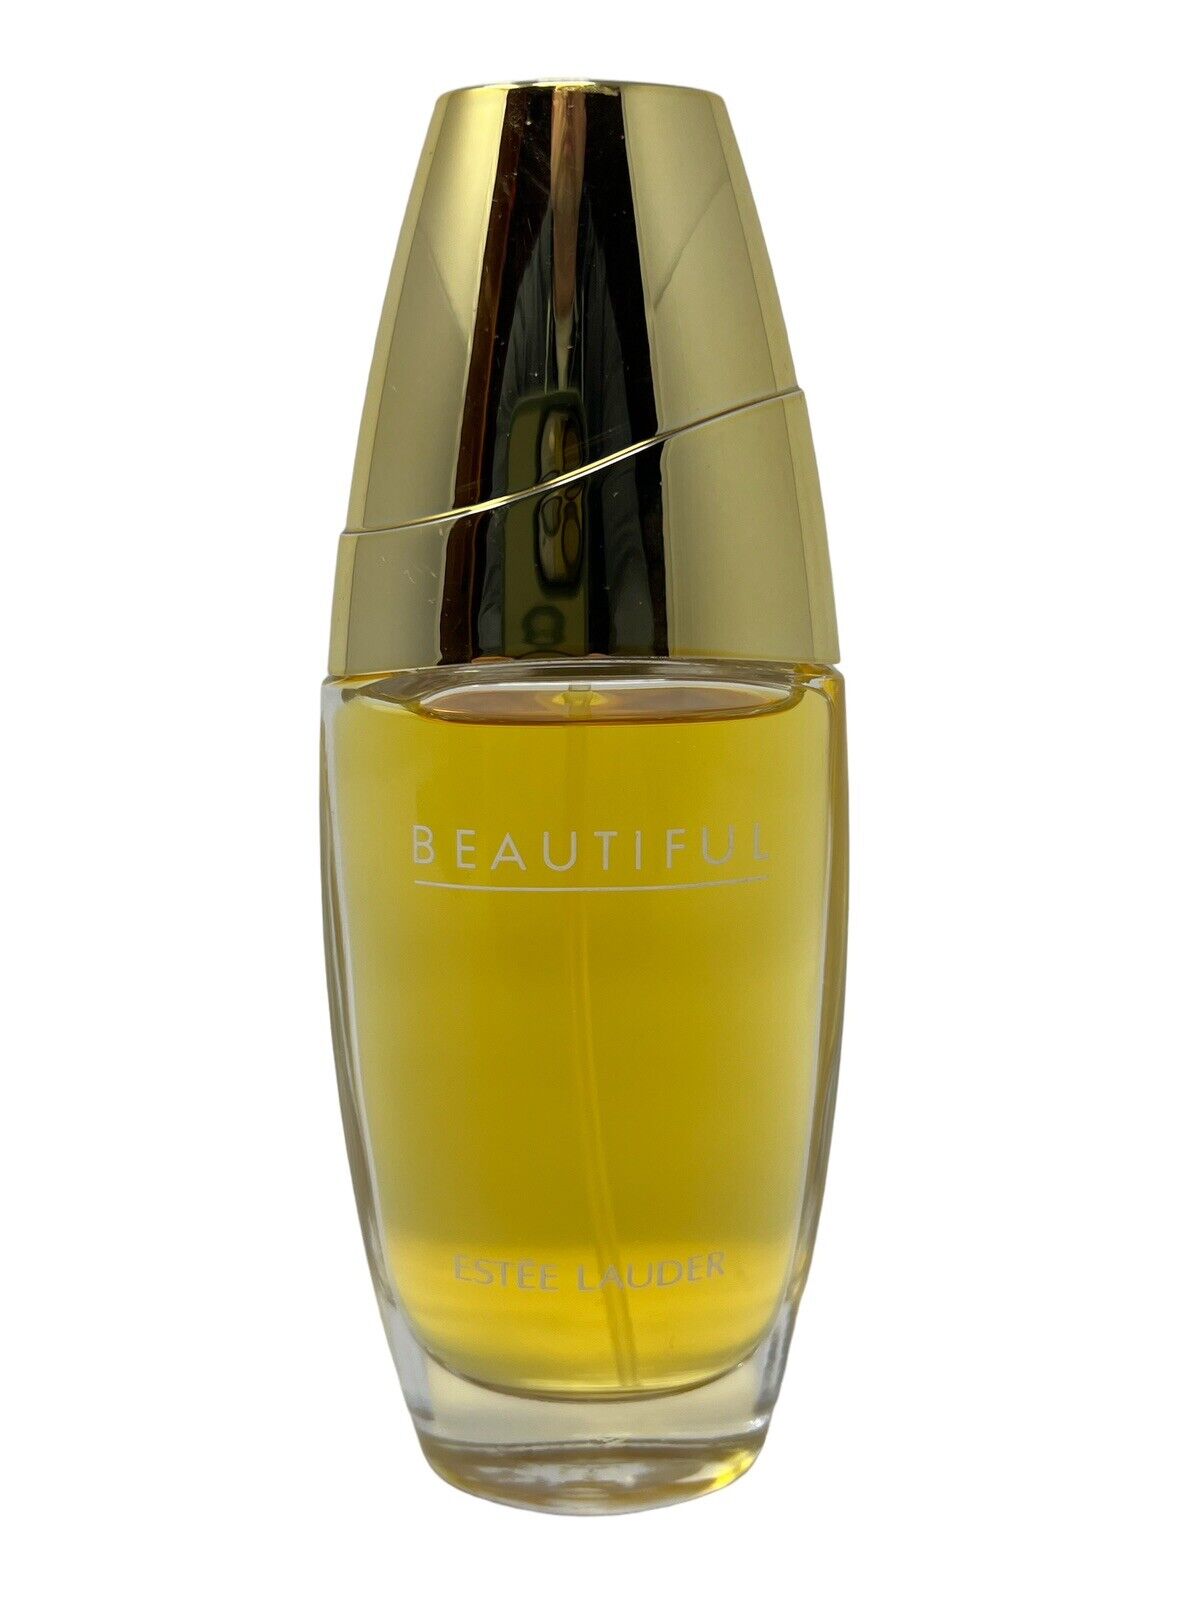 Beautiful by Estee Lauder 2.5 oz / 75ml EDP Perfume For Women Switzerland